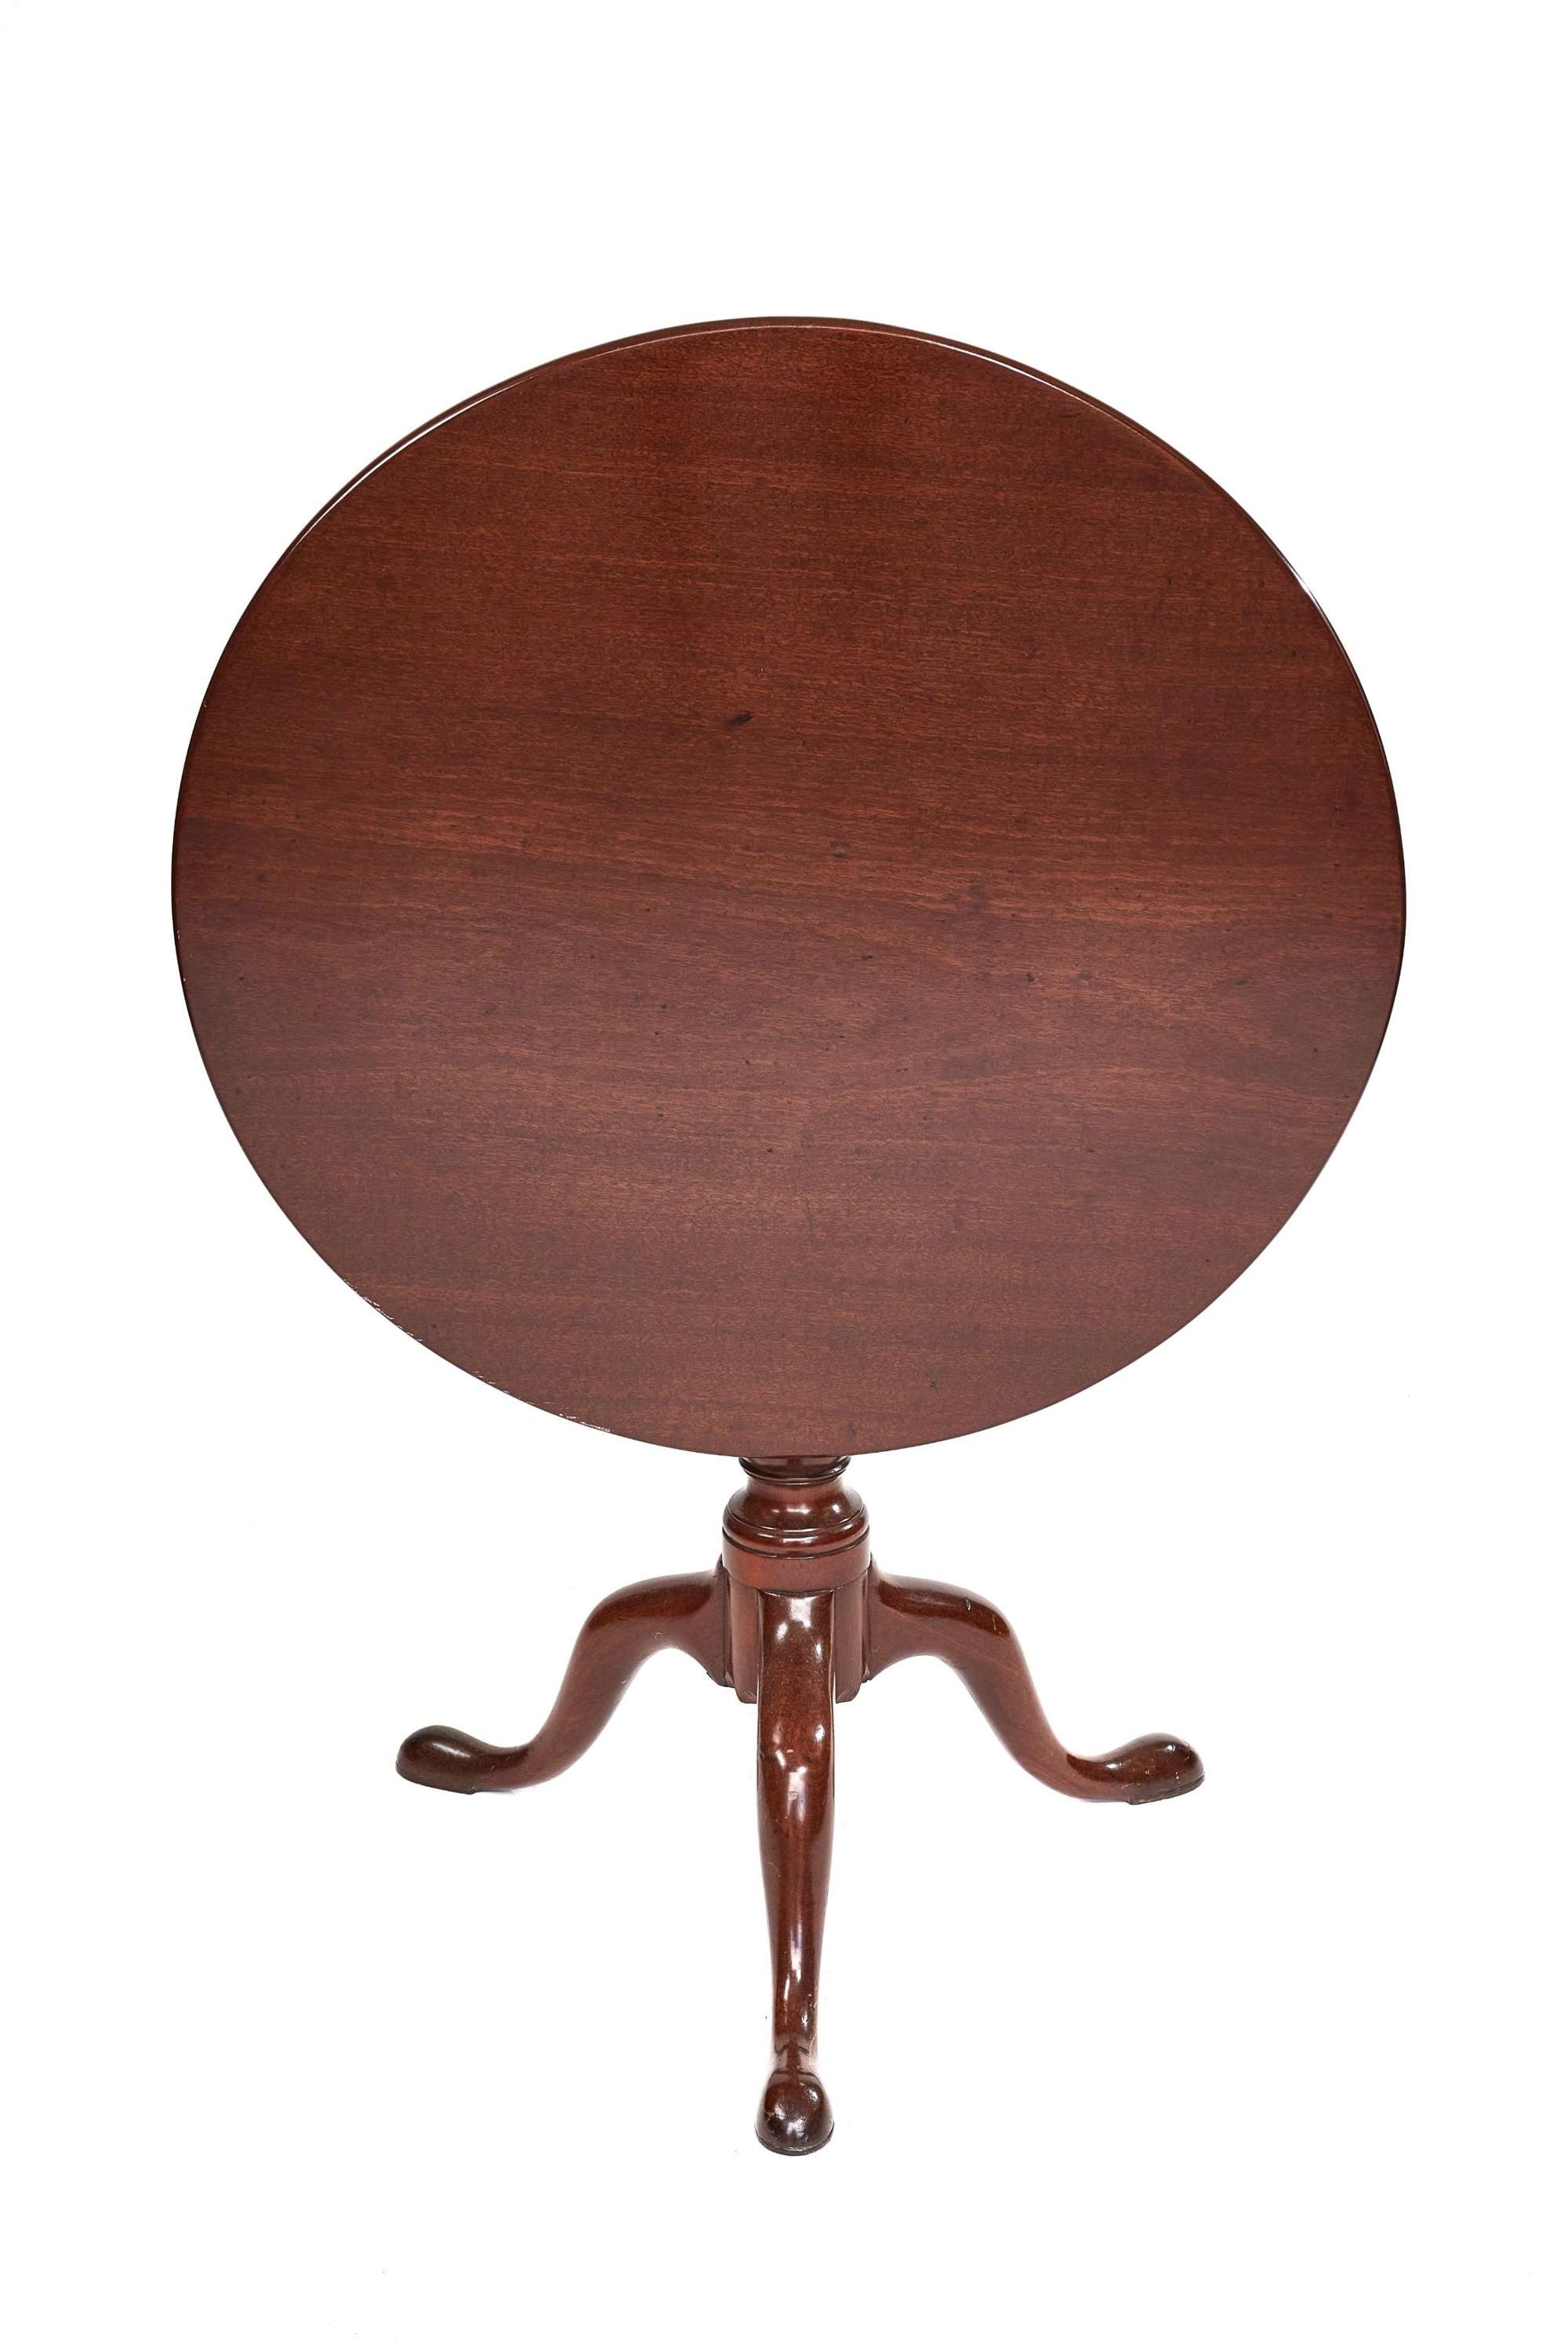 George Iii Antique Mahogany Tripod Table